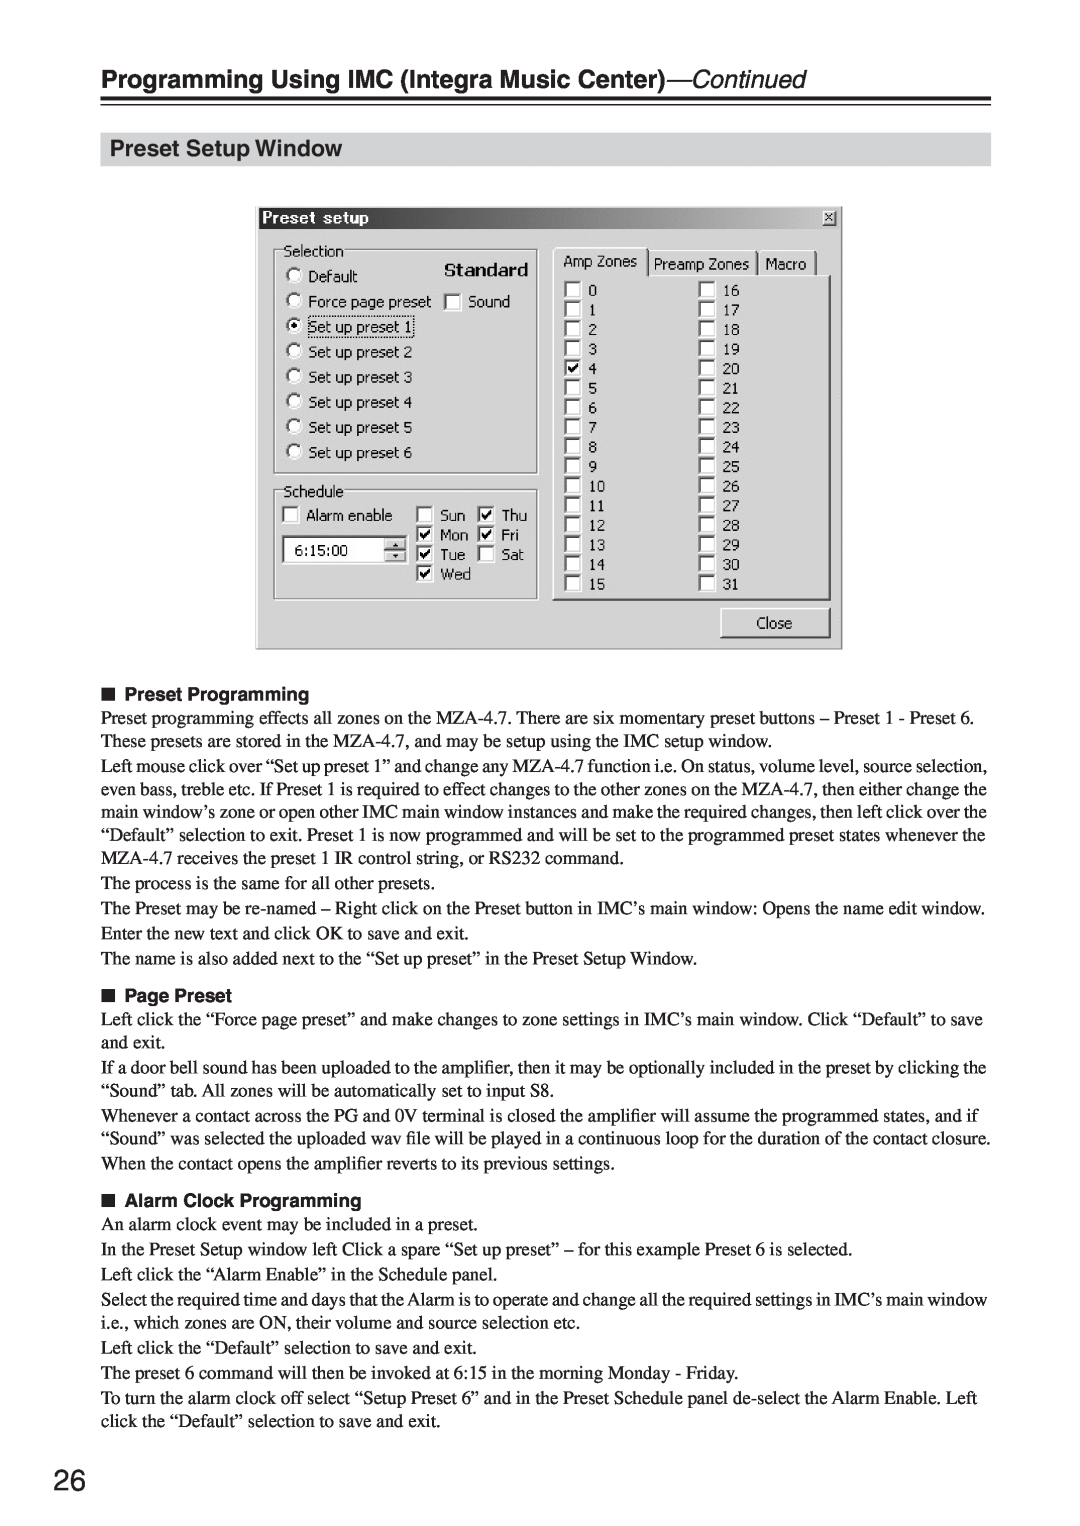 Integra MZA-4.7 instruction manual Preset Setup Window, Preset Programming, Page Preset, Alarm Clock Programming 